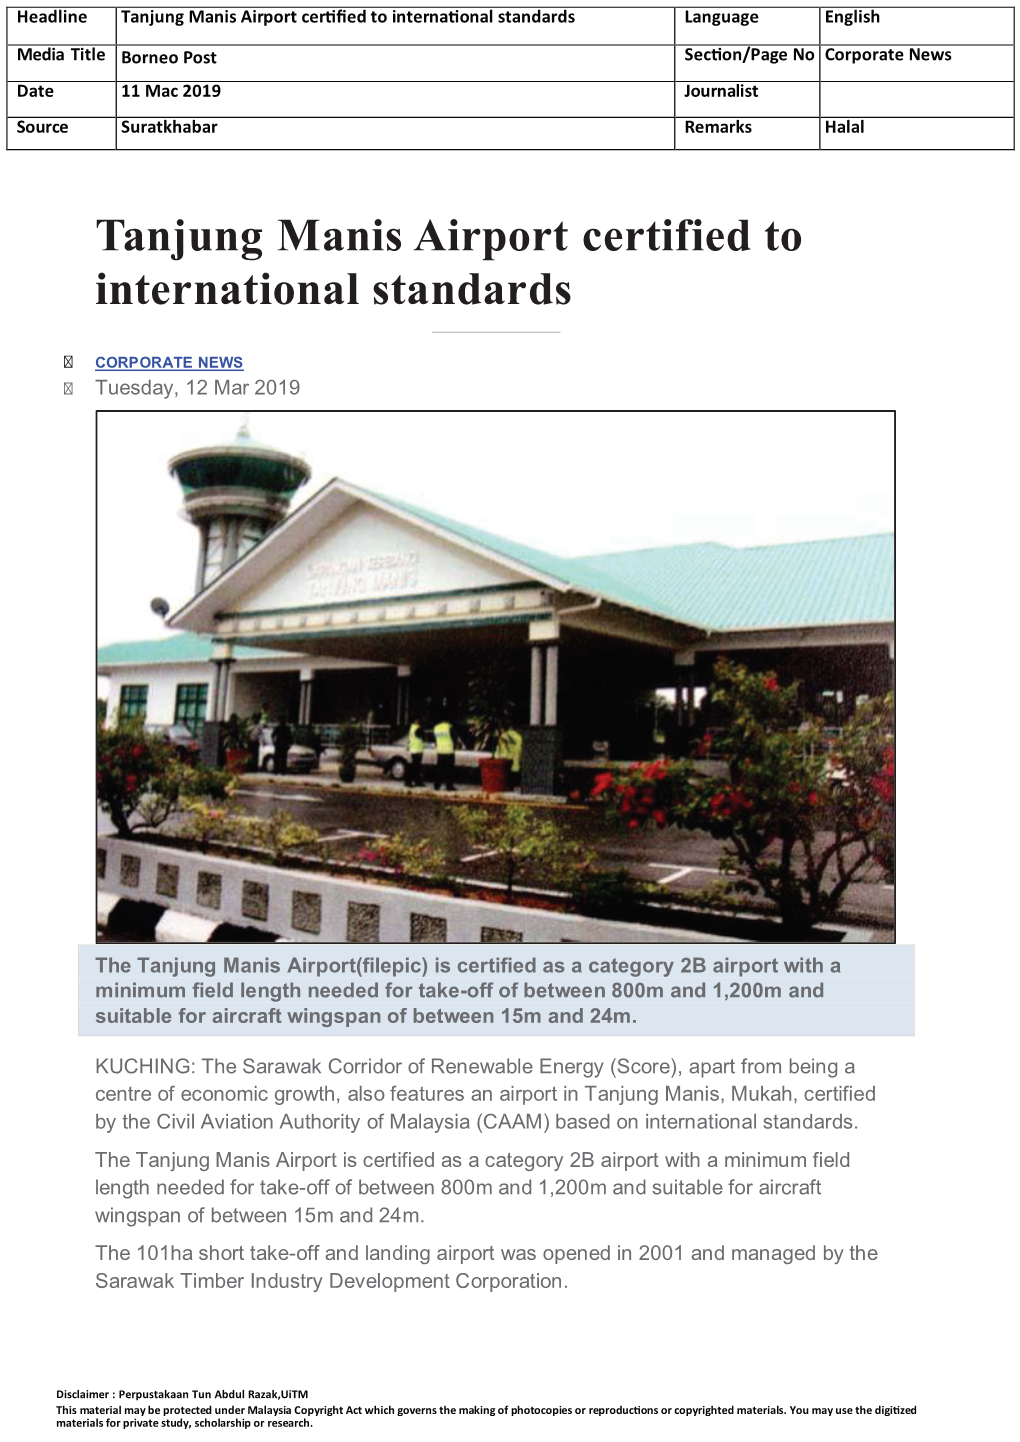 Tanjung Manis Airport Certified to International Standards